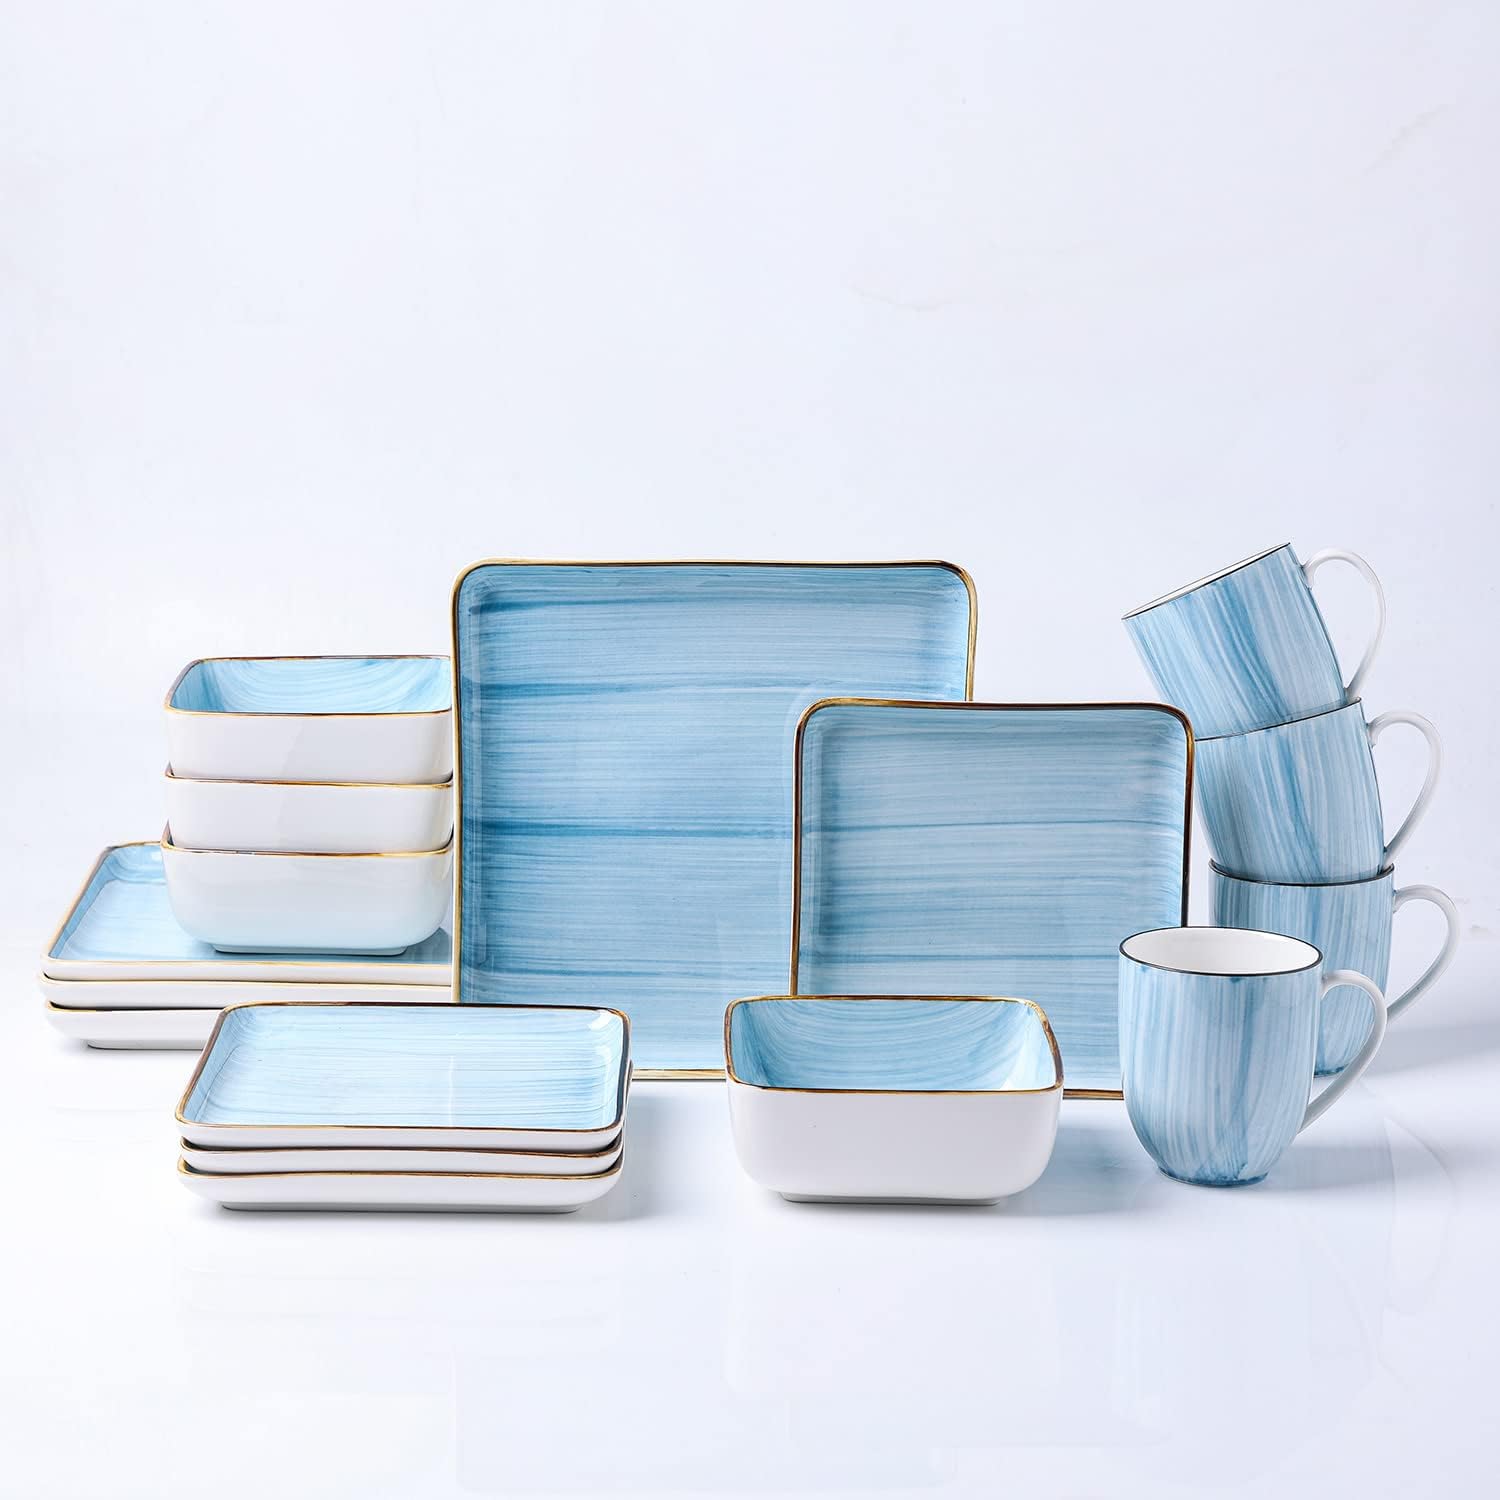 Stone + Lain Esmeralda Porcelain Dinnerware Set, Service for 4, 16 Pieces Square Light Blue Brushed Design